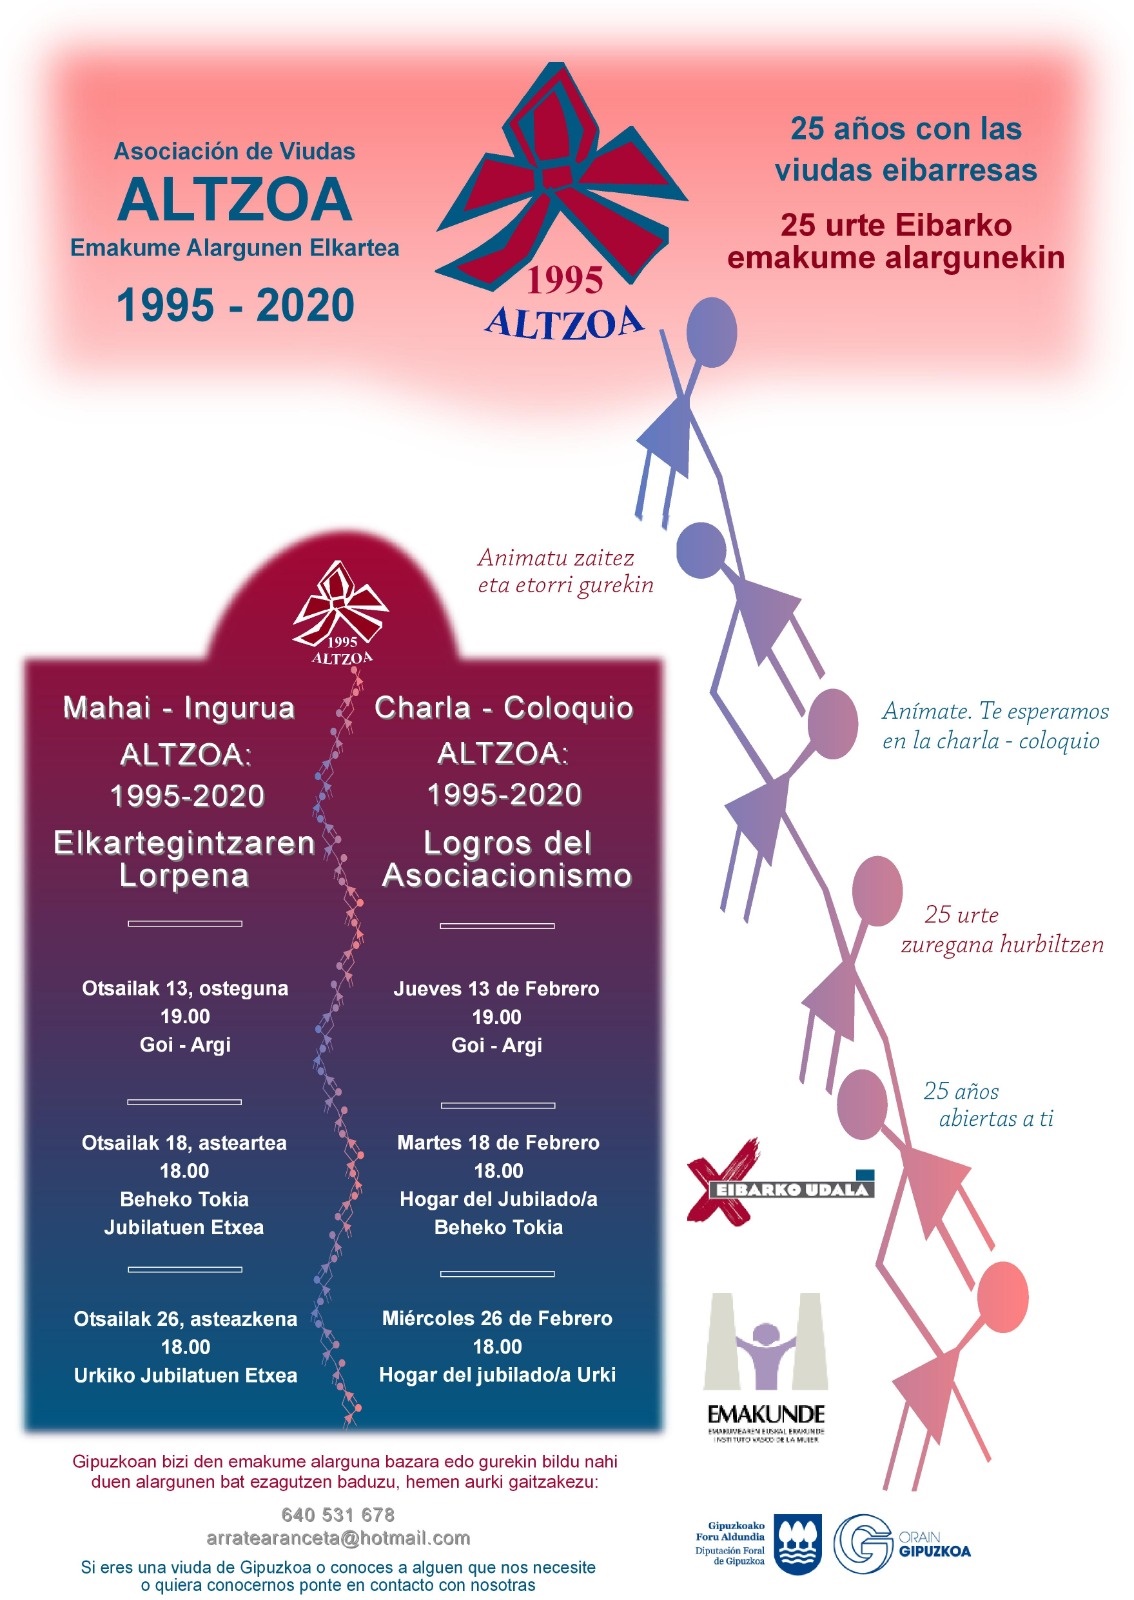 Charla-coloquio. Altzoa: 1995-2020. Logros del asociacionismo